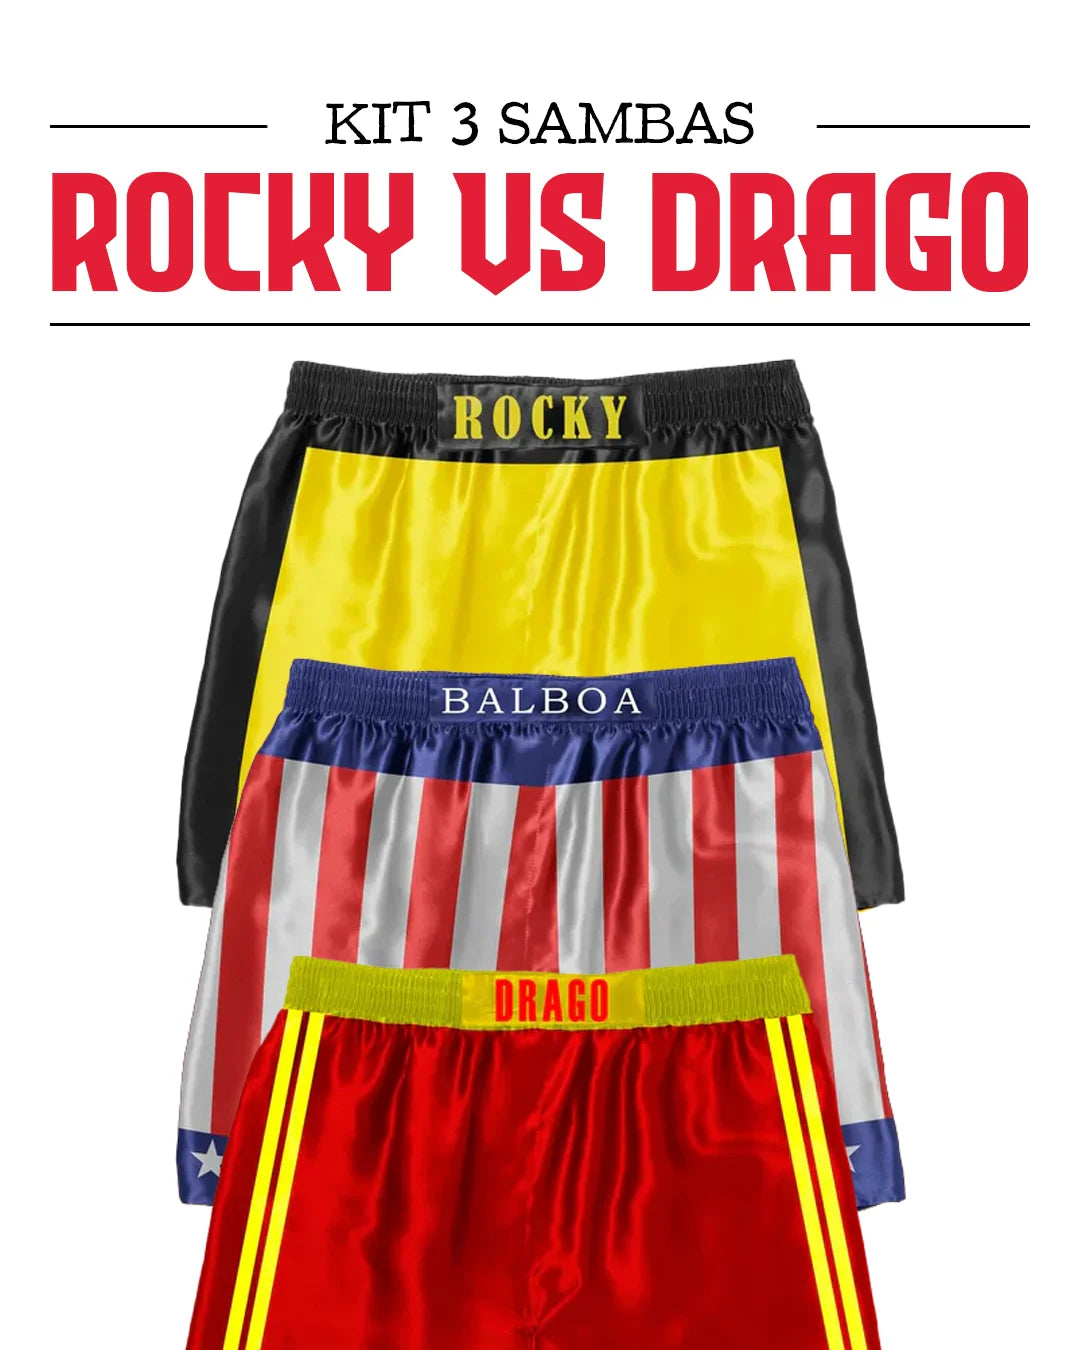 Kit 3 Sambas - Rocky VS Drago